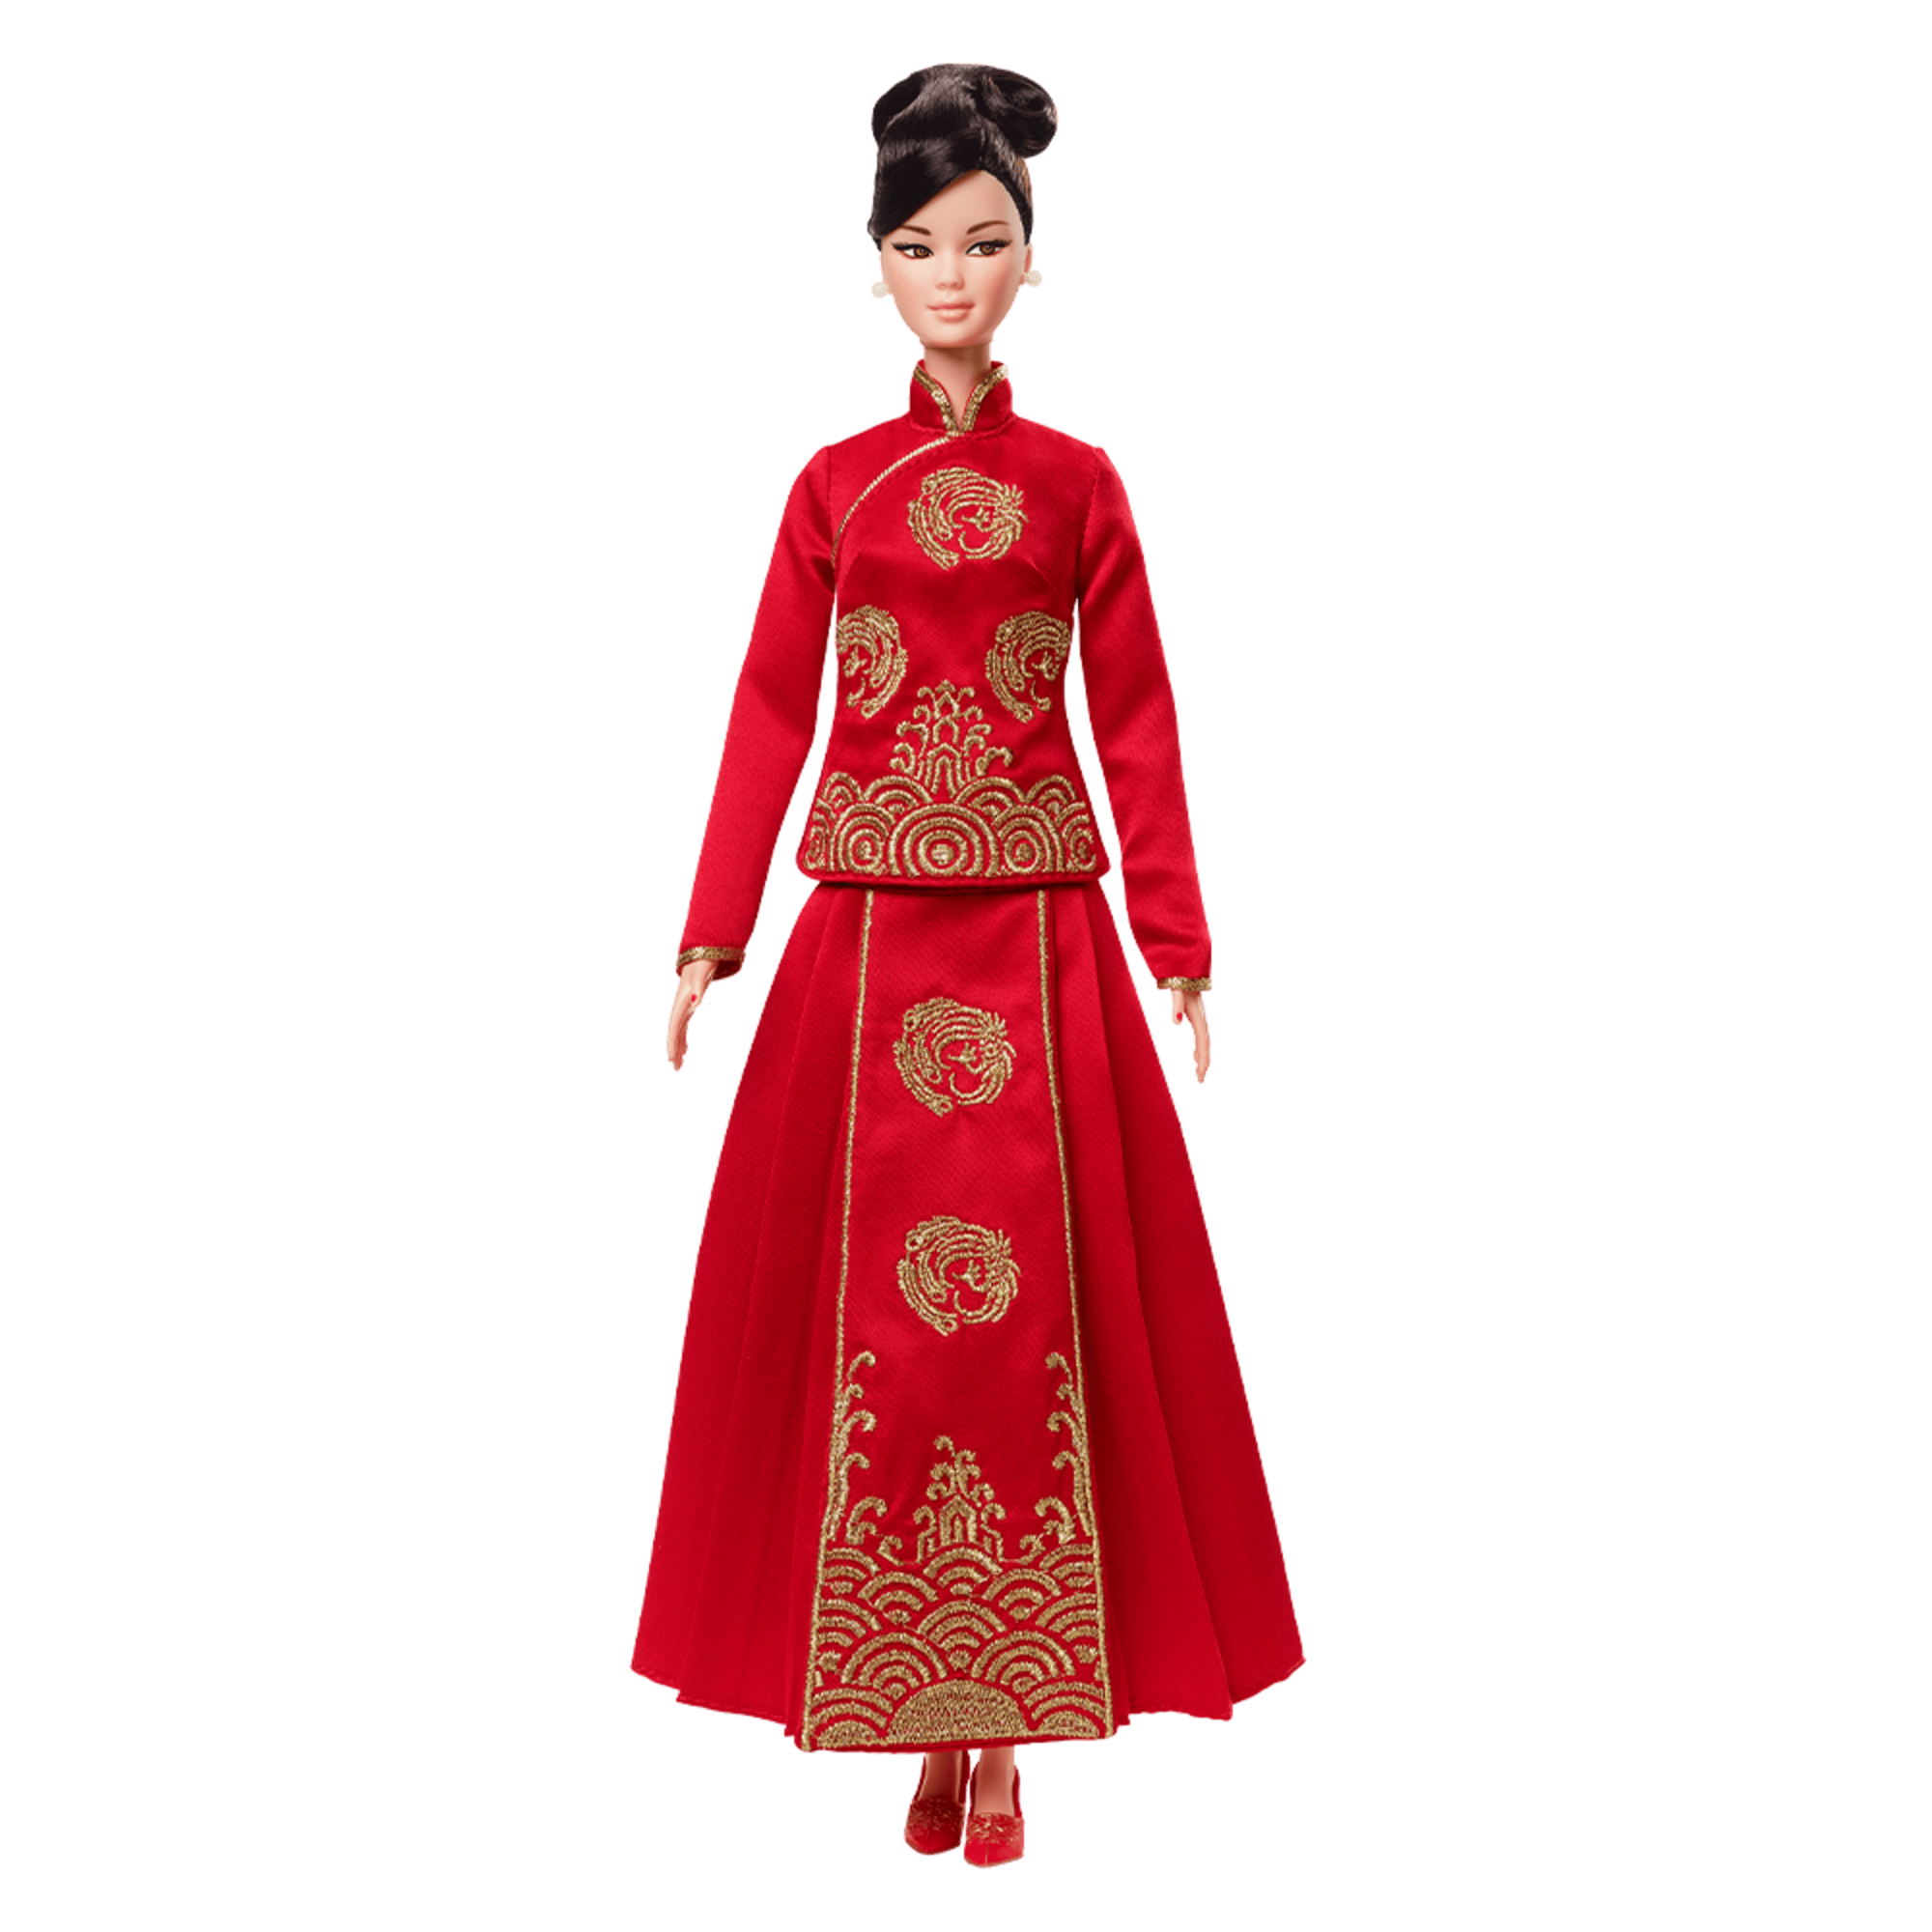 Virus Rusteloos recept Barbie Lunar New Year Doll Designed by Guo Pei – Mattel Creations